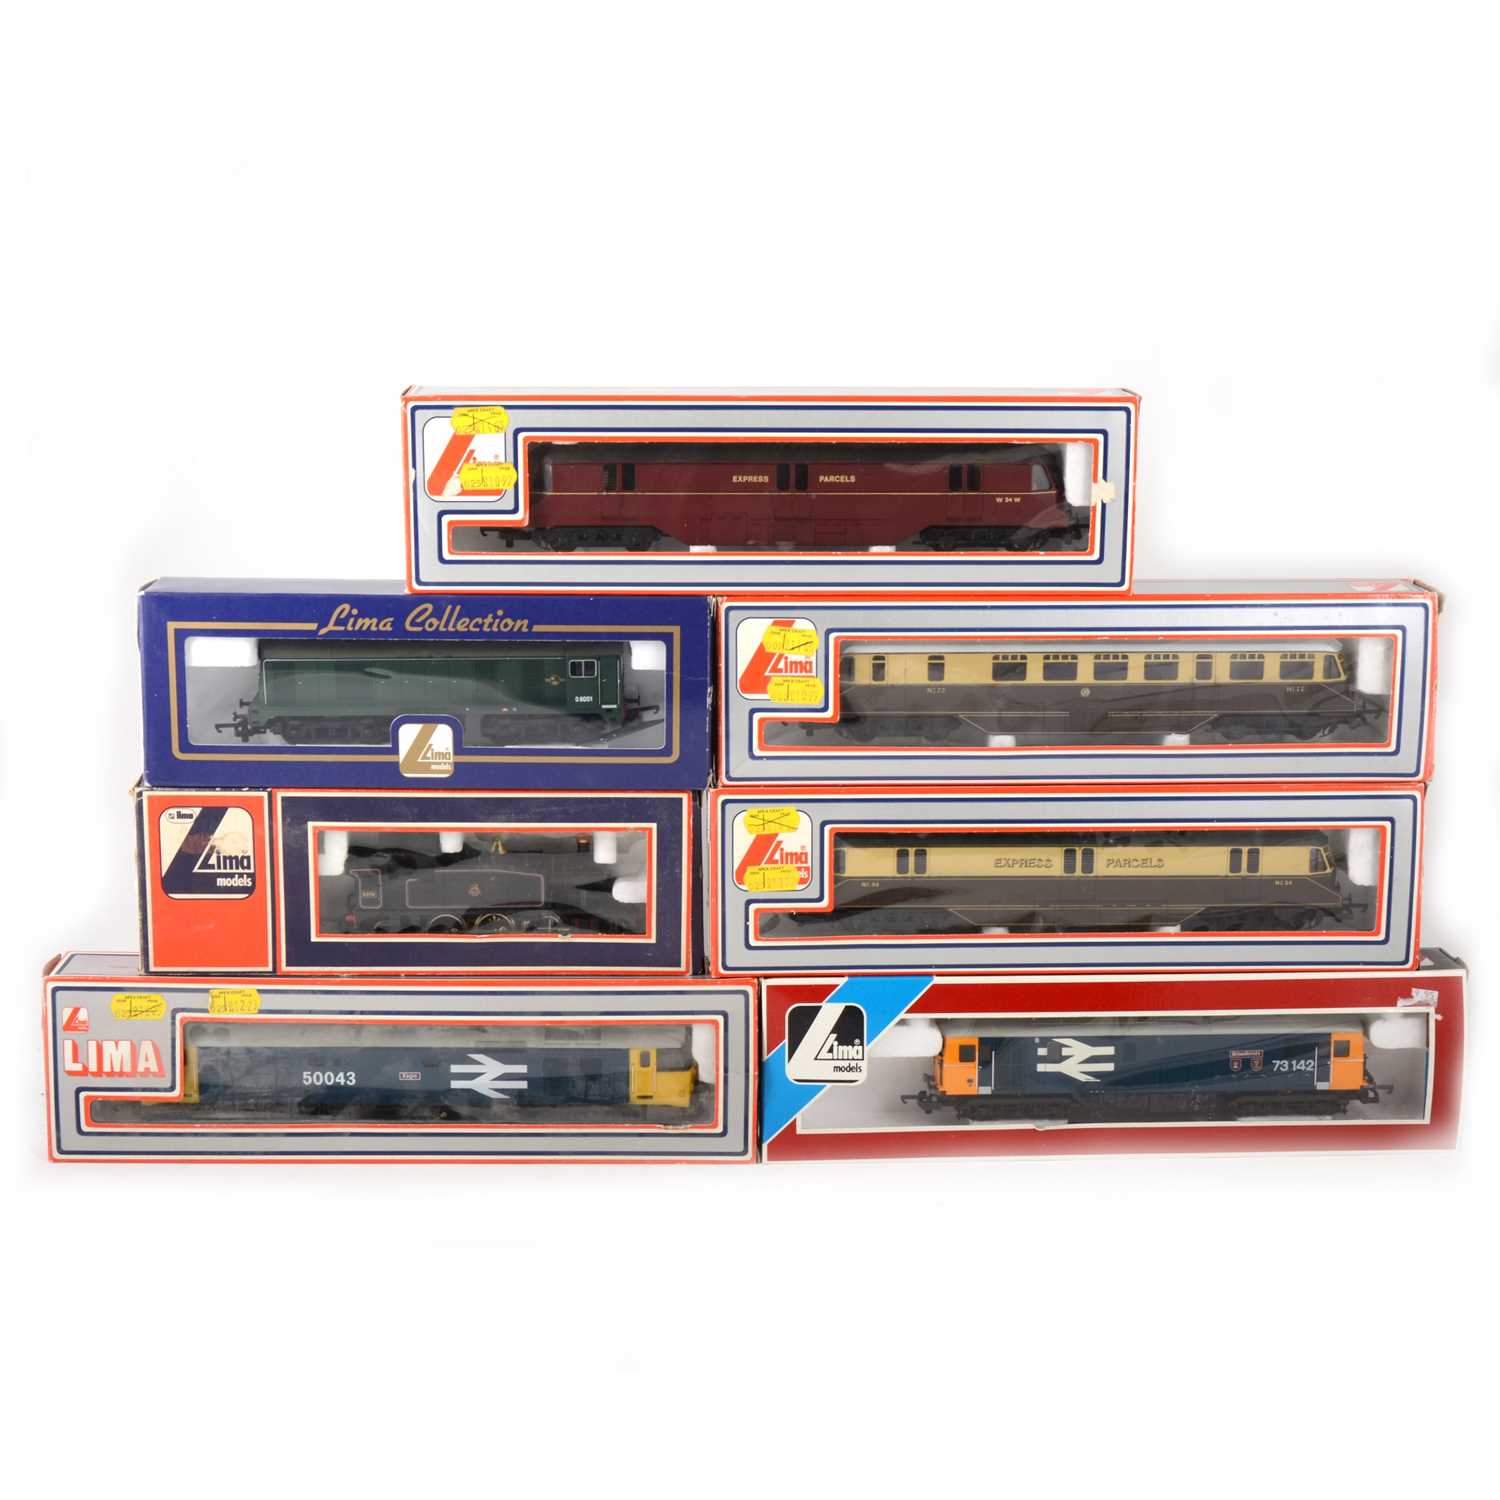 Lot 545 - Seven Lima OO gauge model railway locomotives, 205144, 205133,205169, 205143, 73142, 205142, 205110.